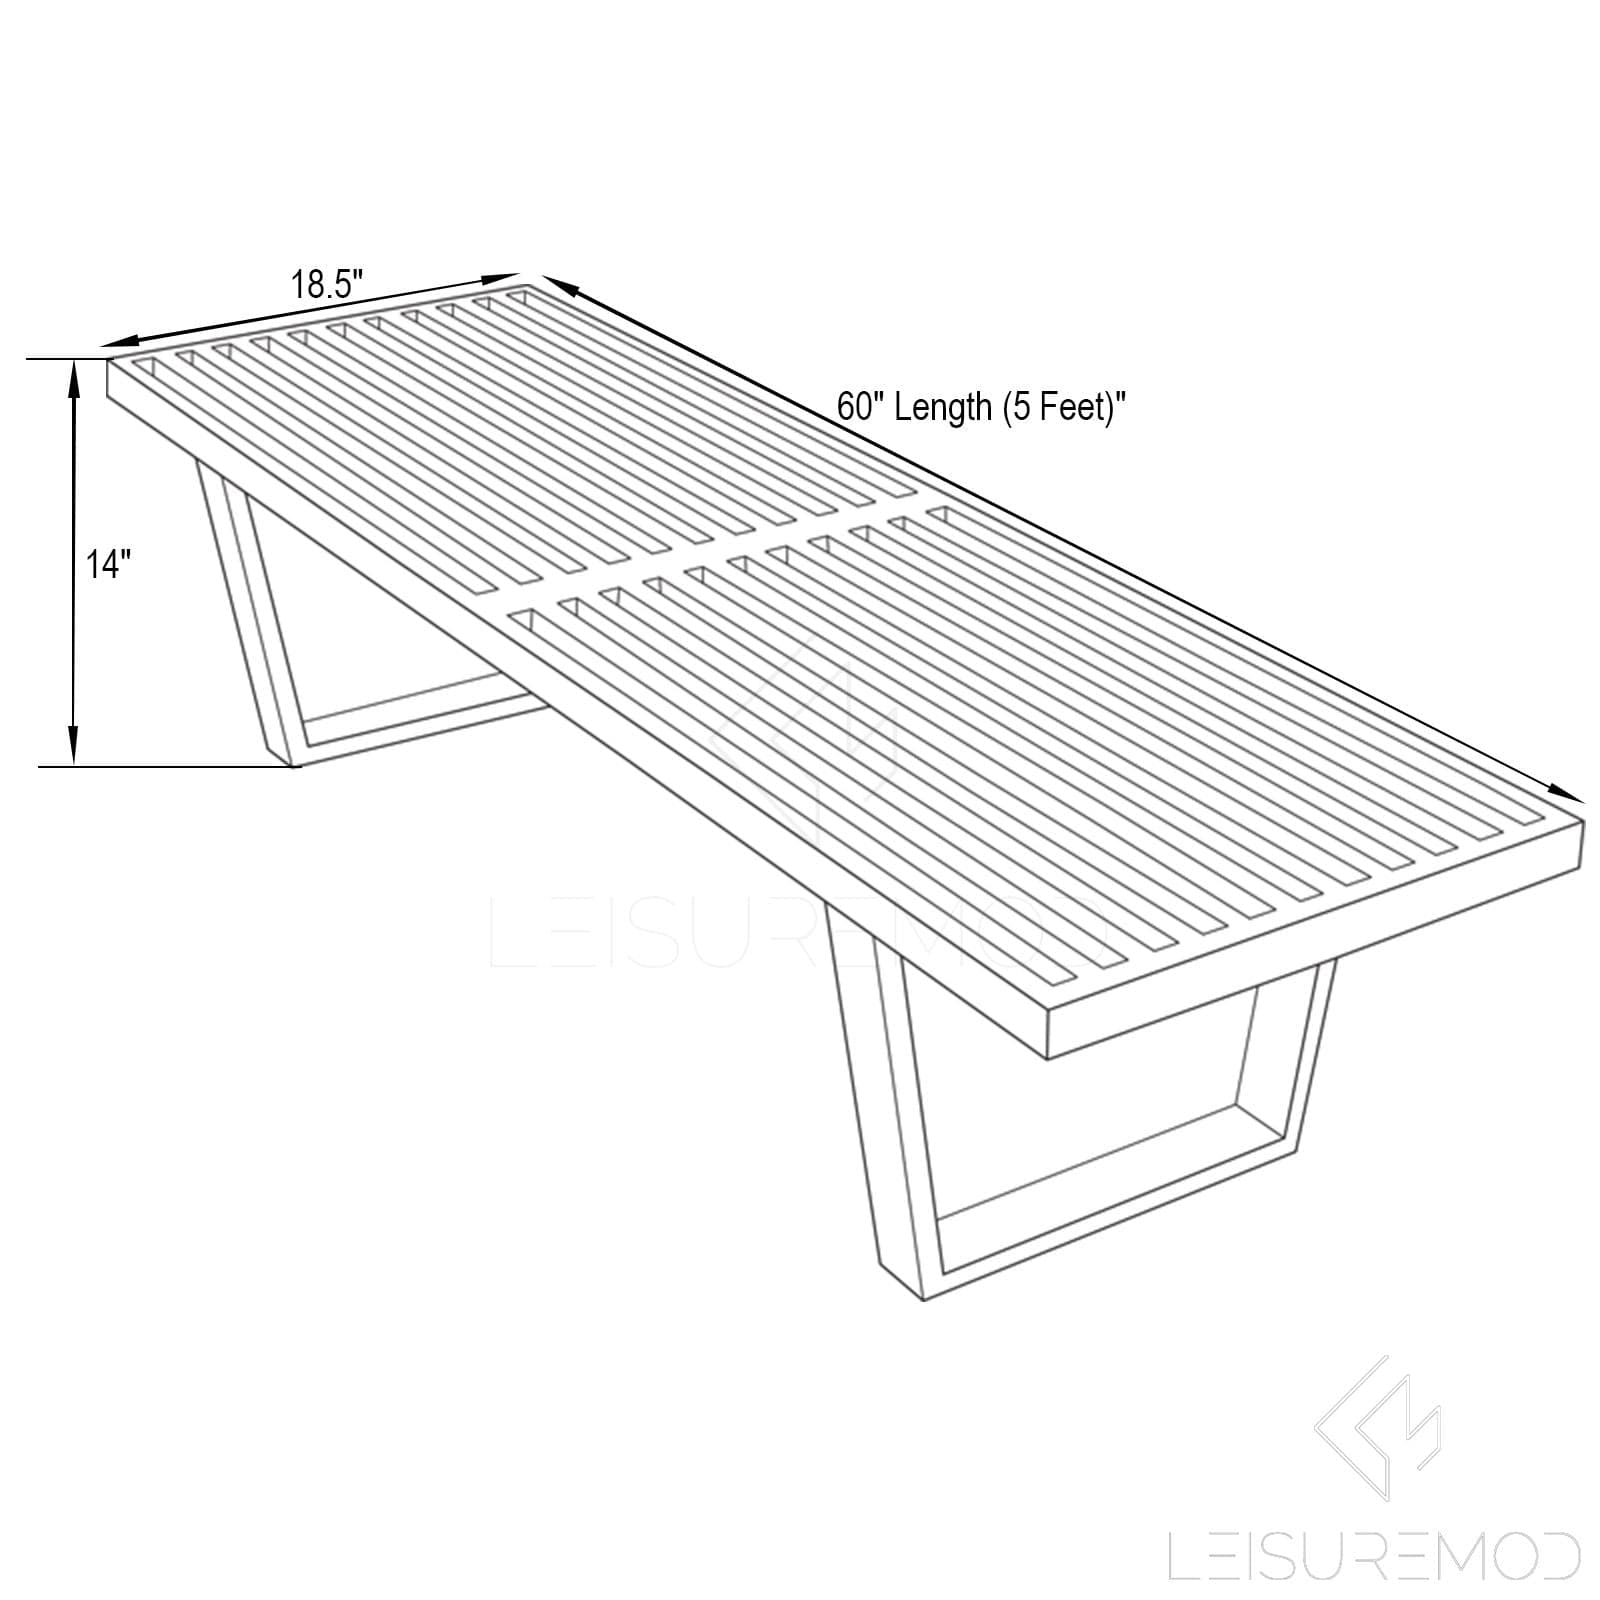 LeisureMod Mid-Century Inwood Platform Bench - 5 Feet